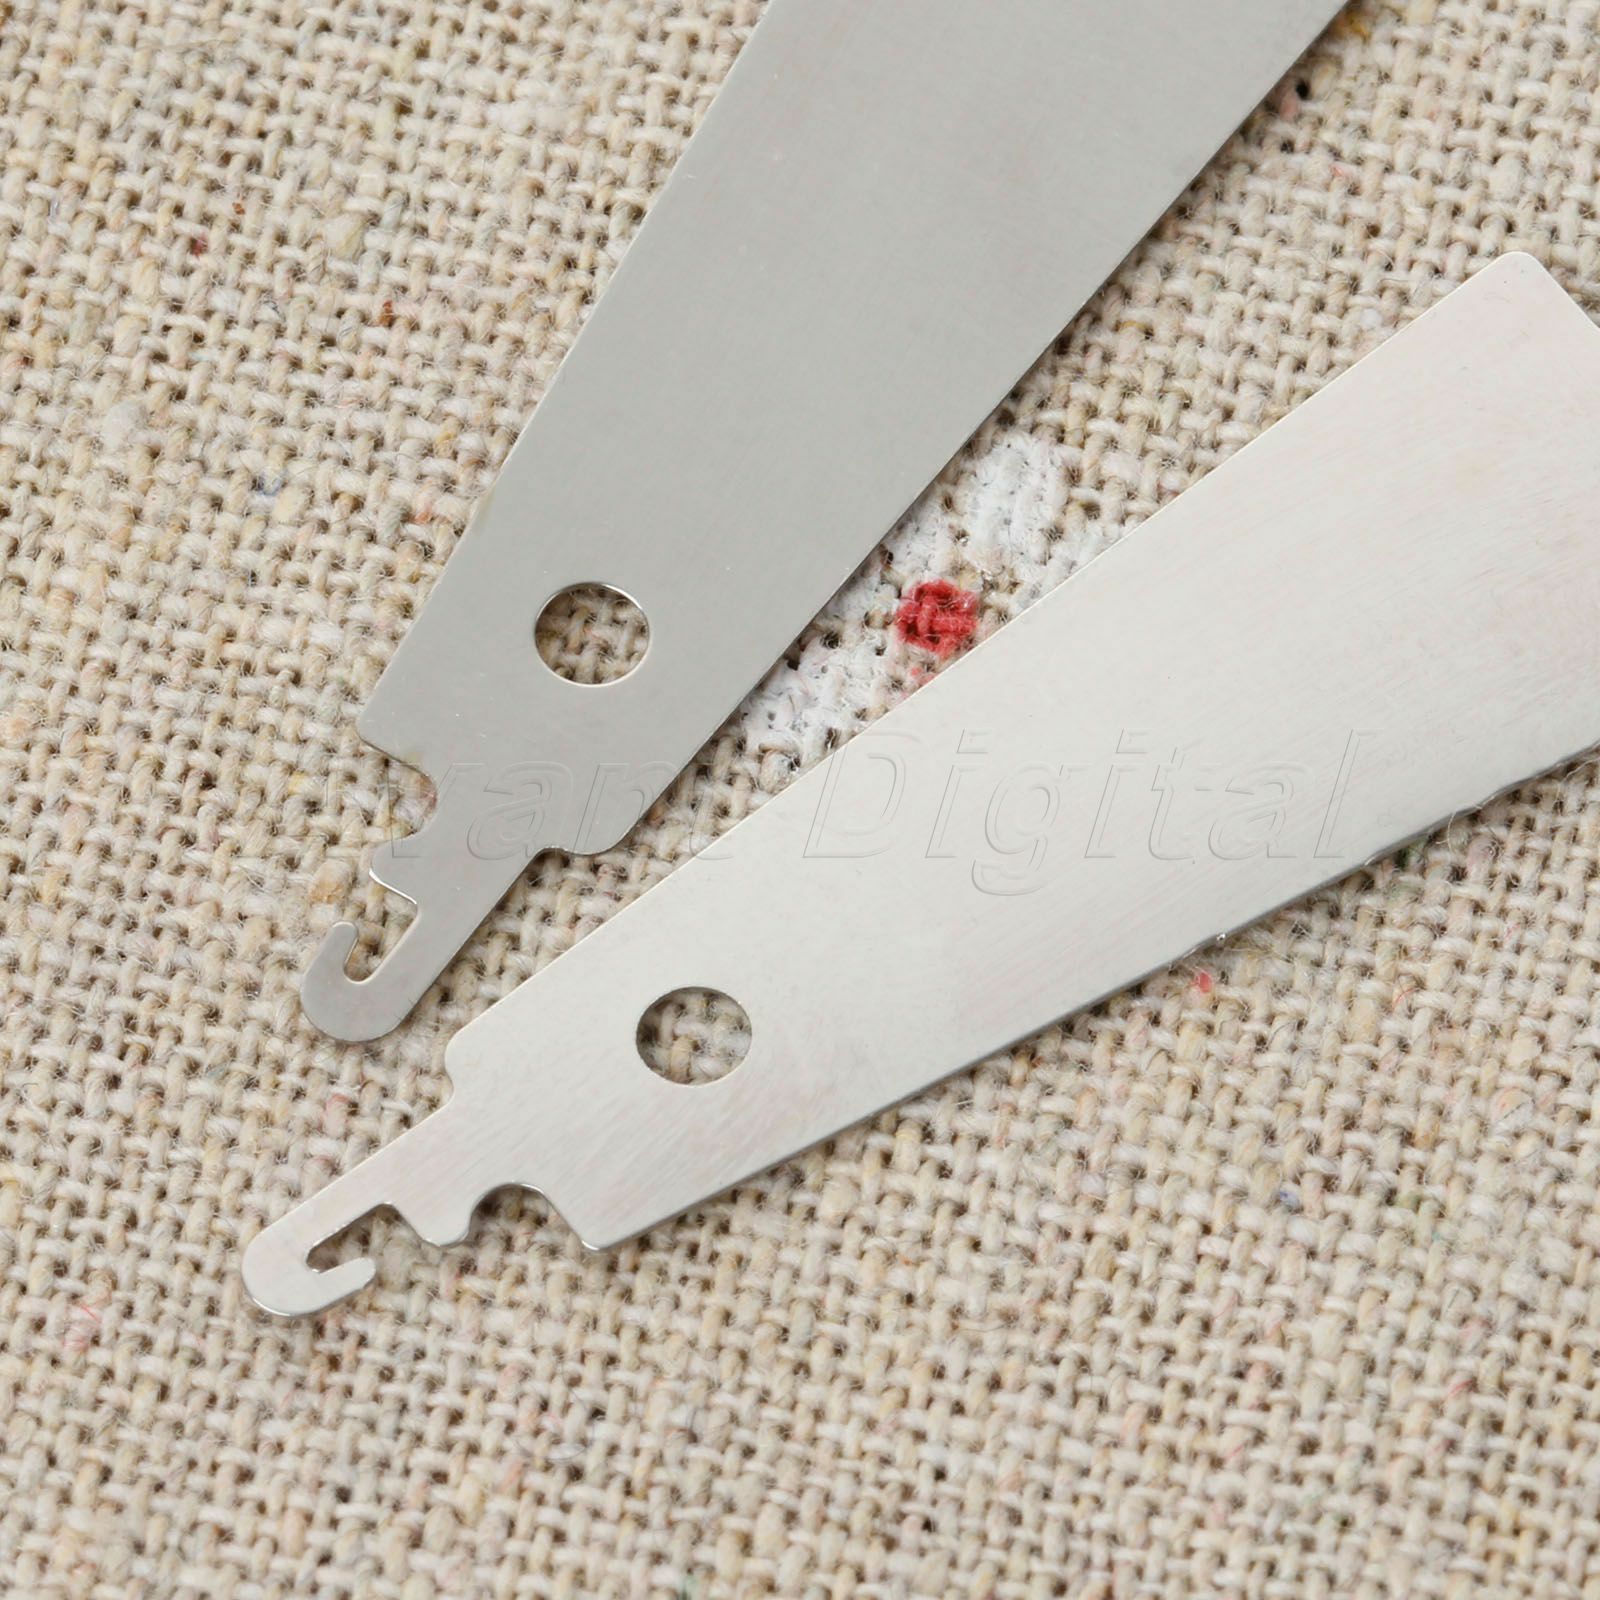 10pcs Steel Hook Needle Threader Cross Stitching Sewing DIY Craft Needlework Kit